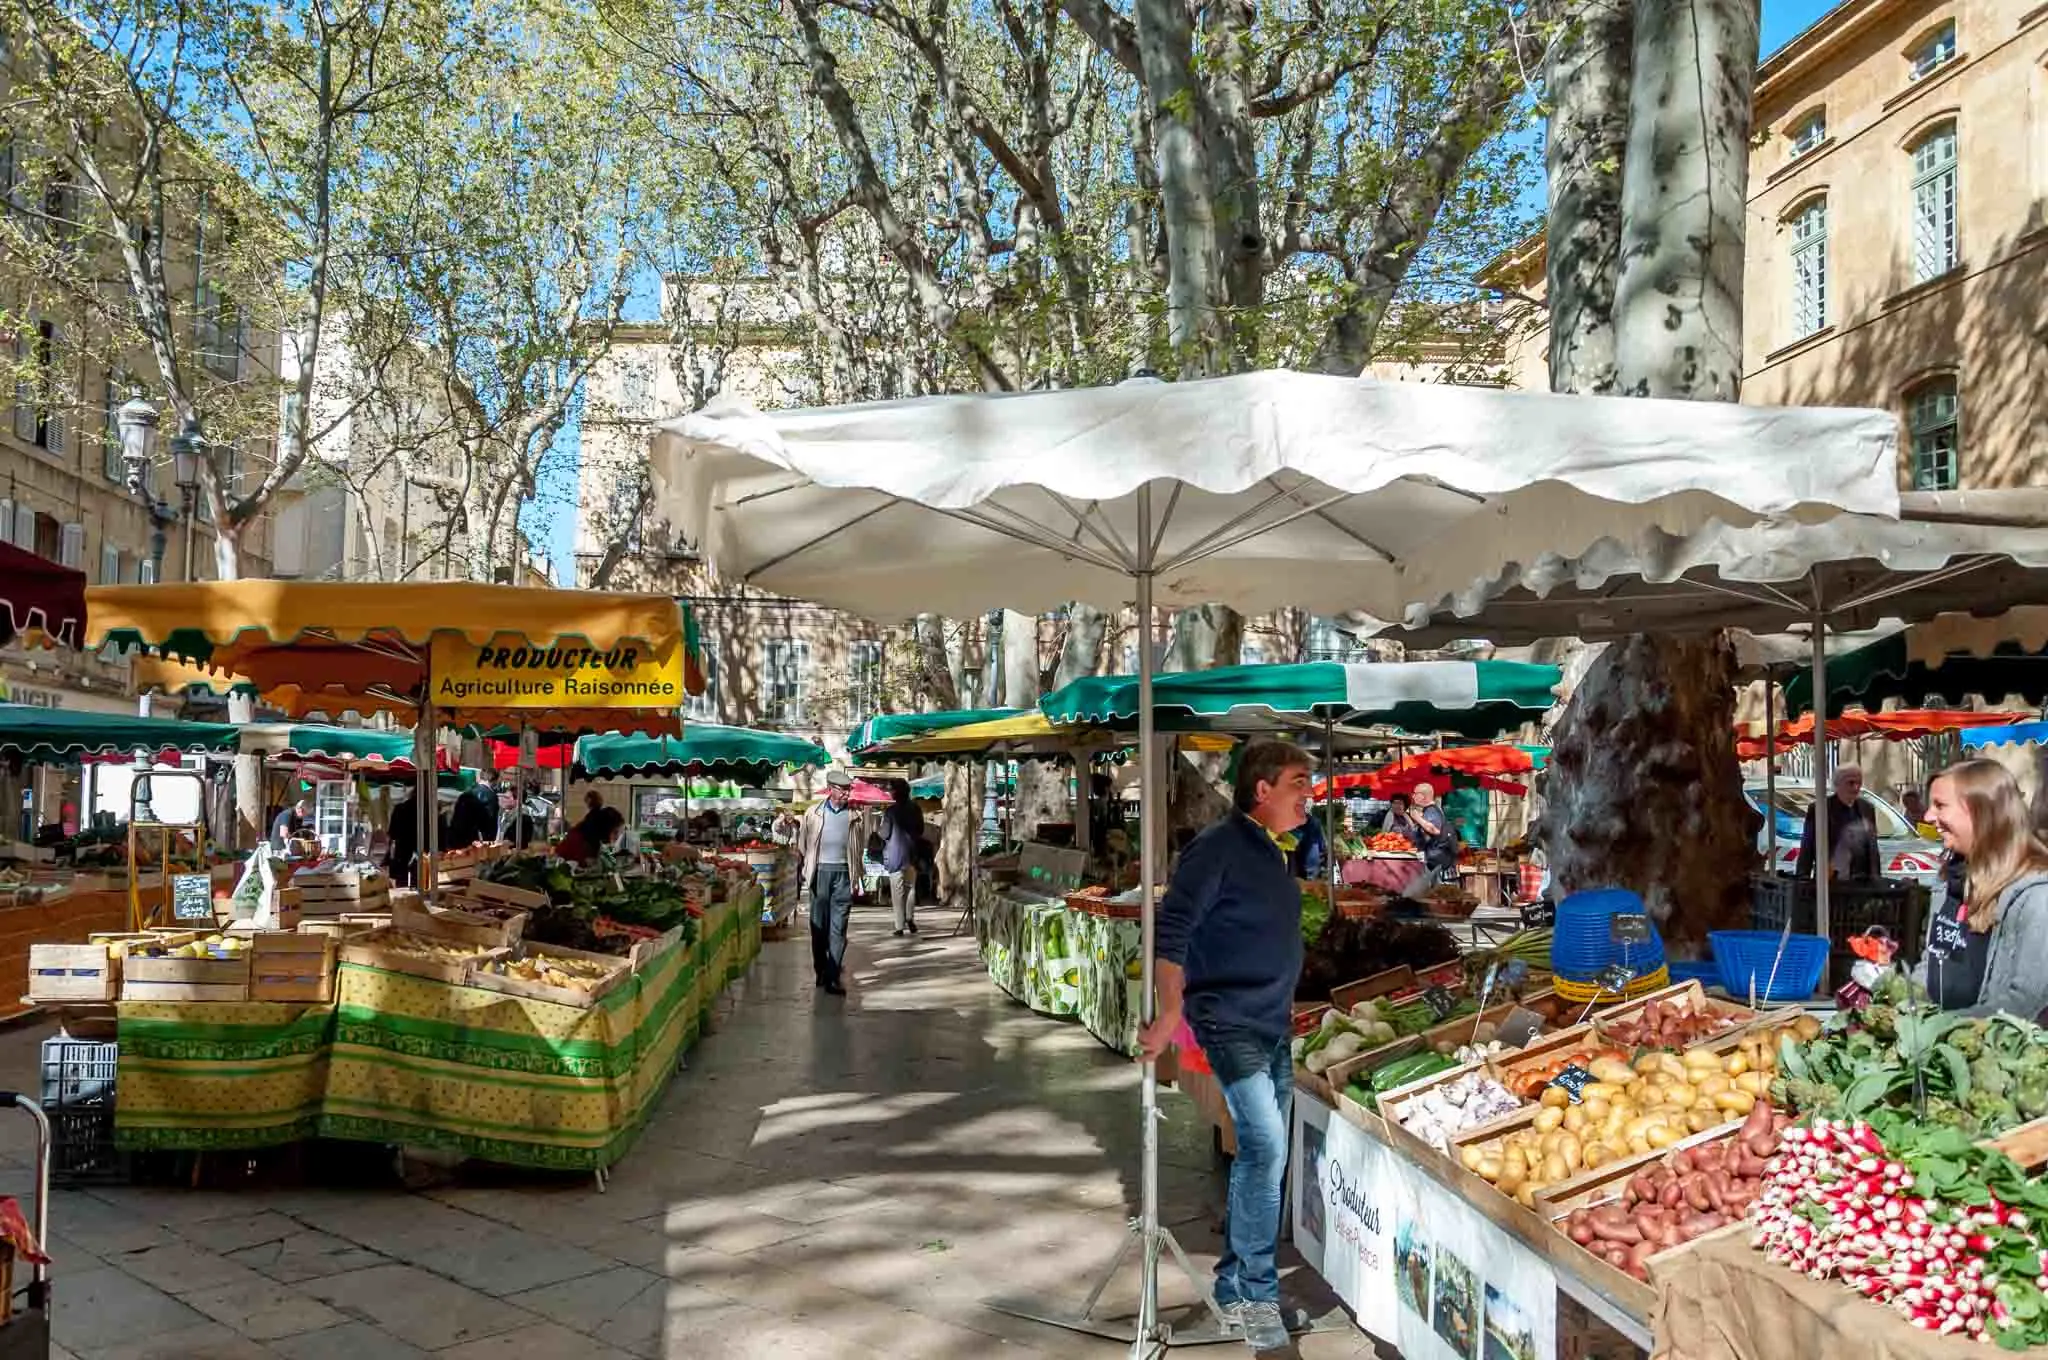 Farmer's market at Place Richelme under the plane trees in Aix-en-Provence, France